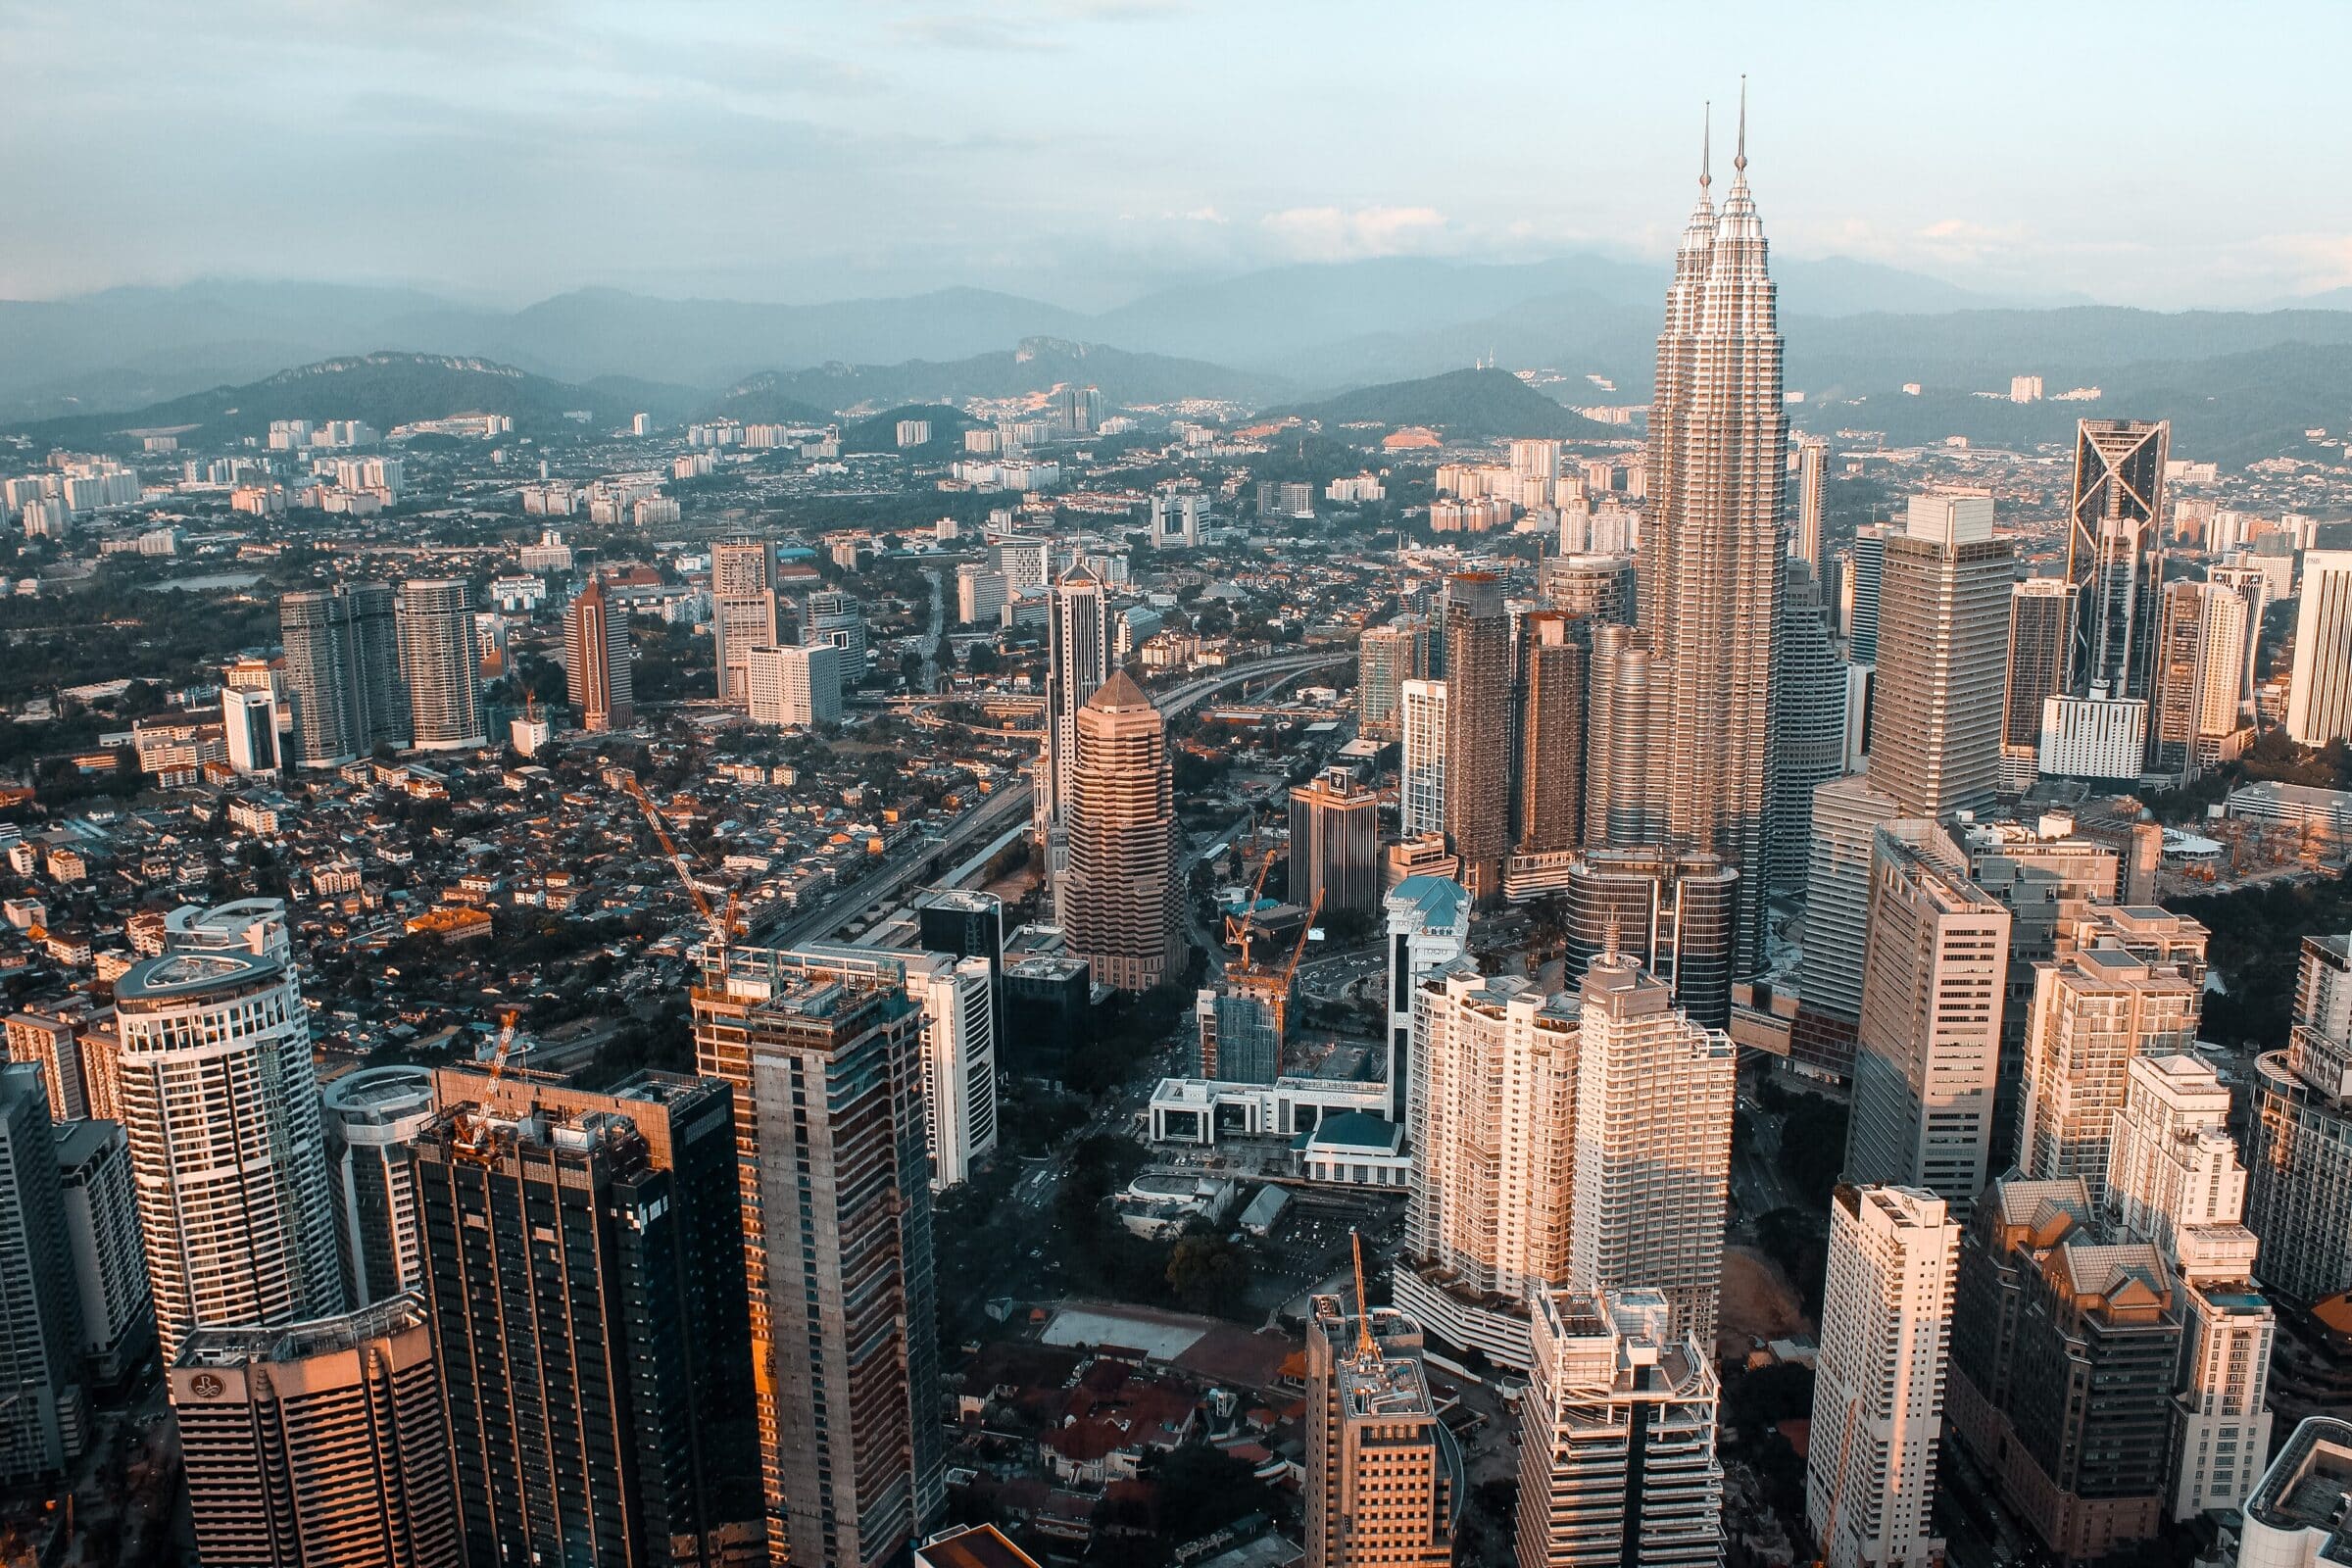 Kuala Lumpur - Foto tirada durante nossa visita em 2015